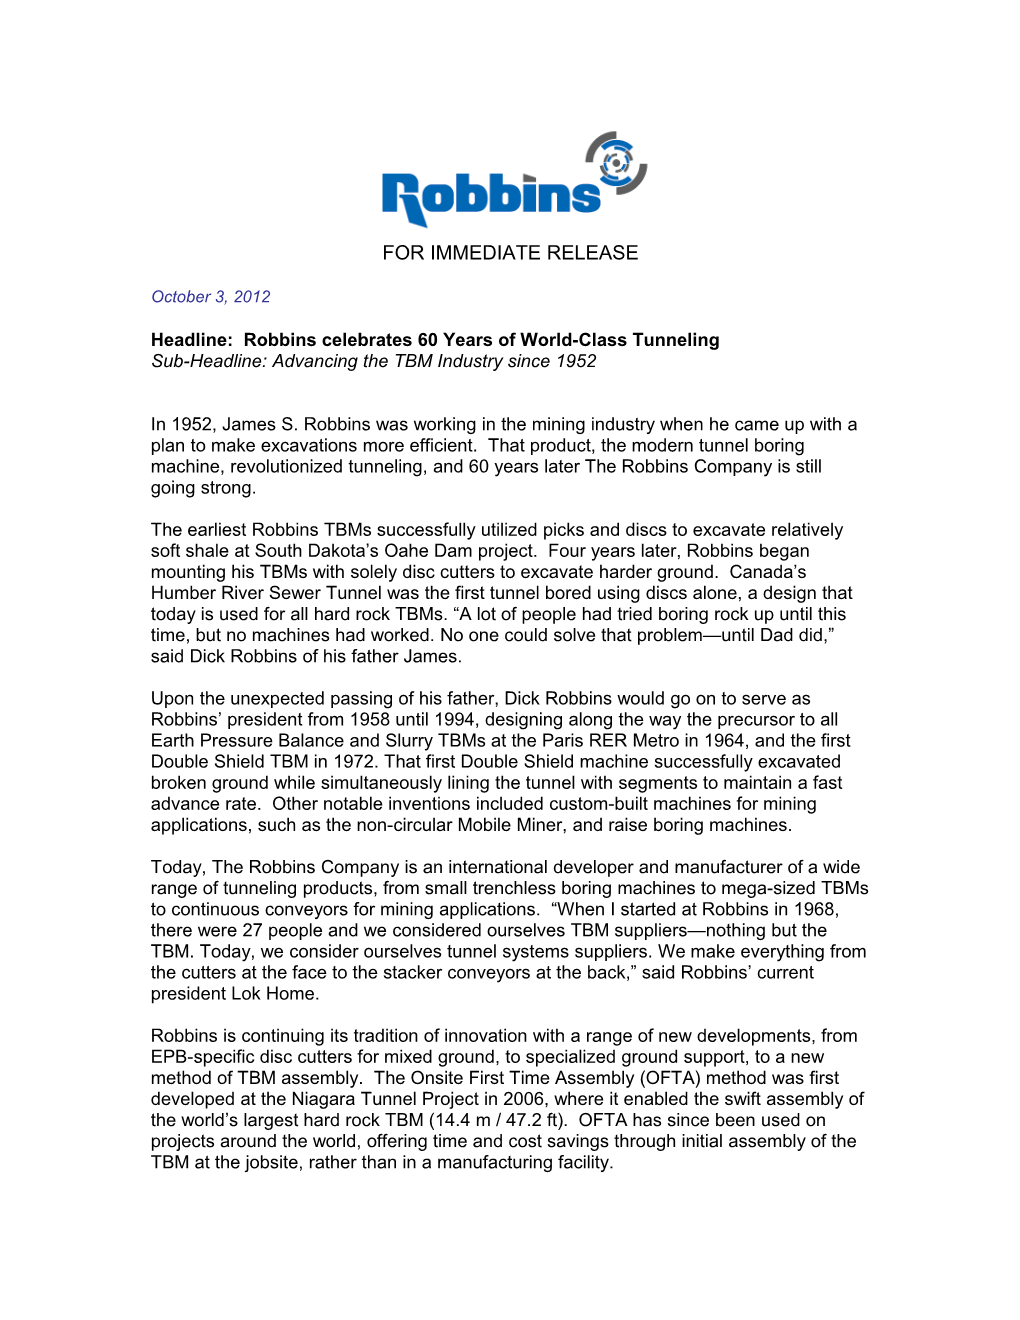 Headline: Robbins Celebrates 60 Years of World-Class Tunneling